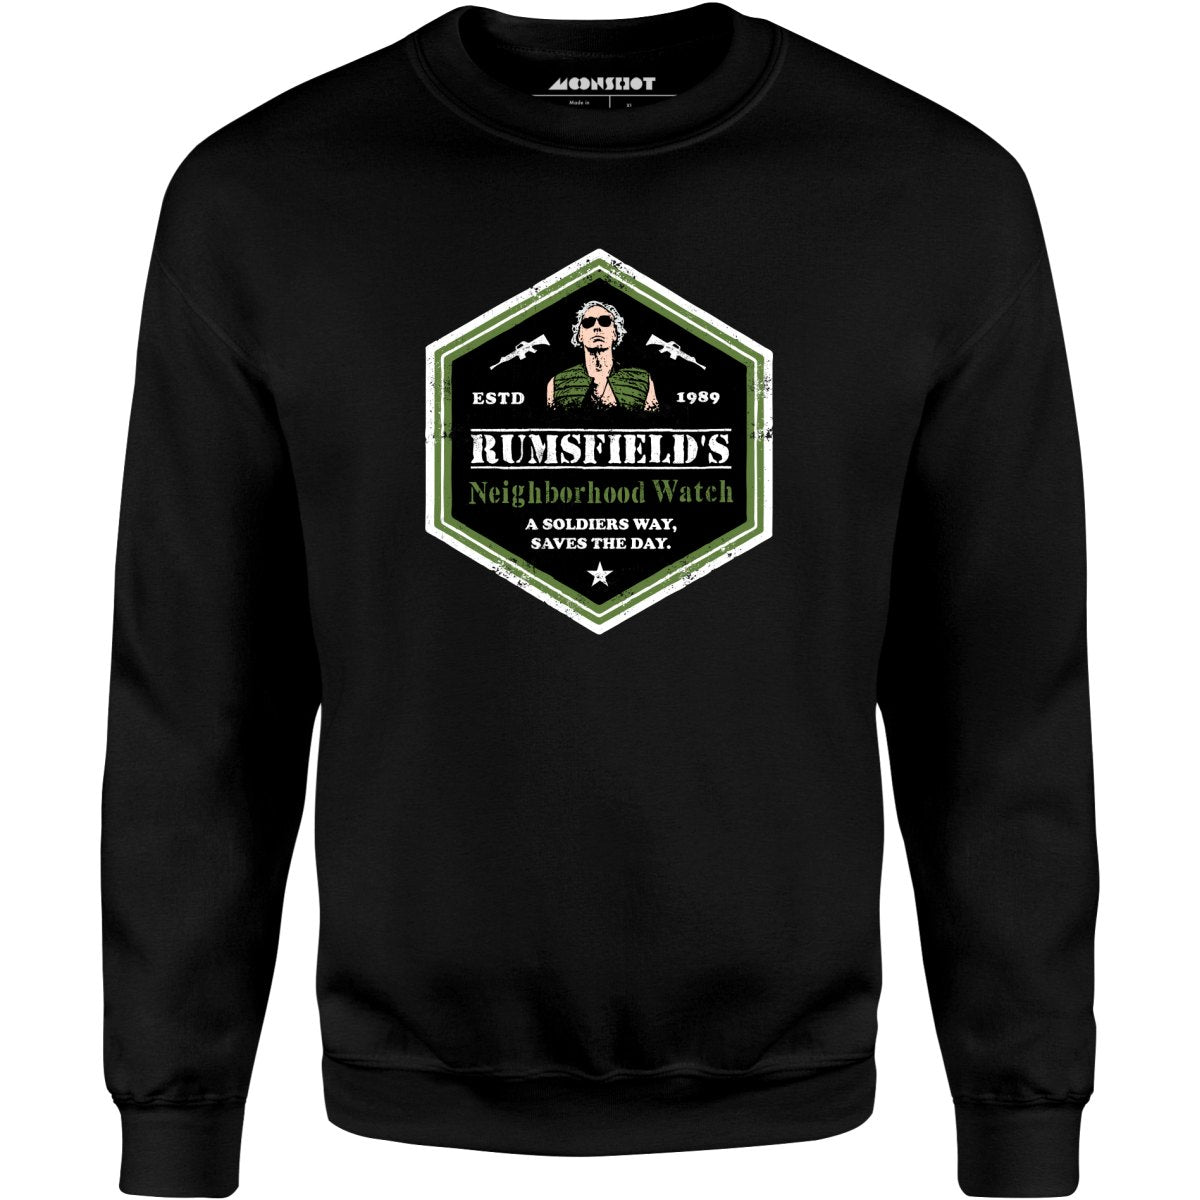 Rumsfield's Neighborhood Watch - Unisex Sweatshirt